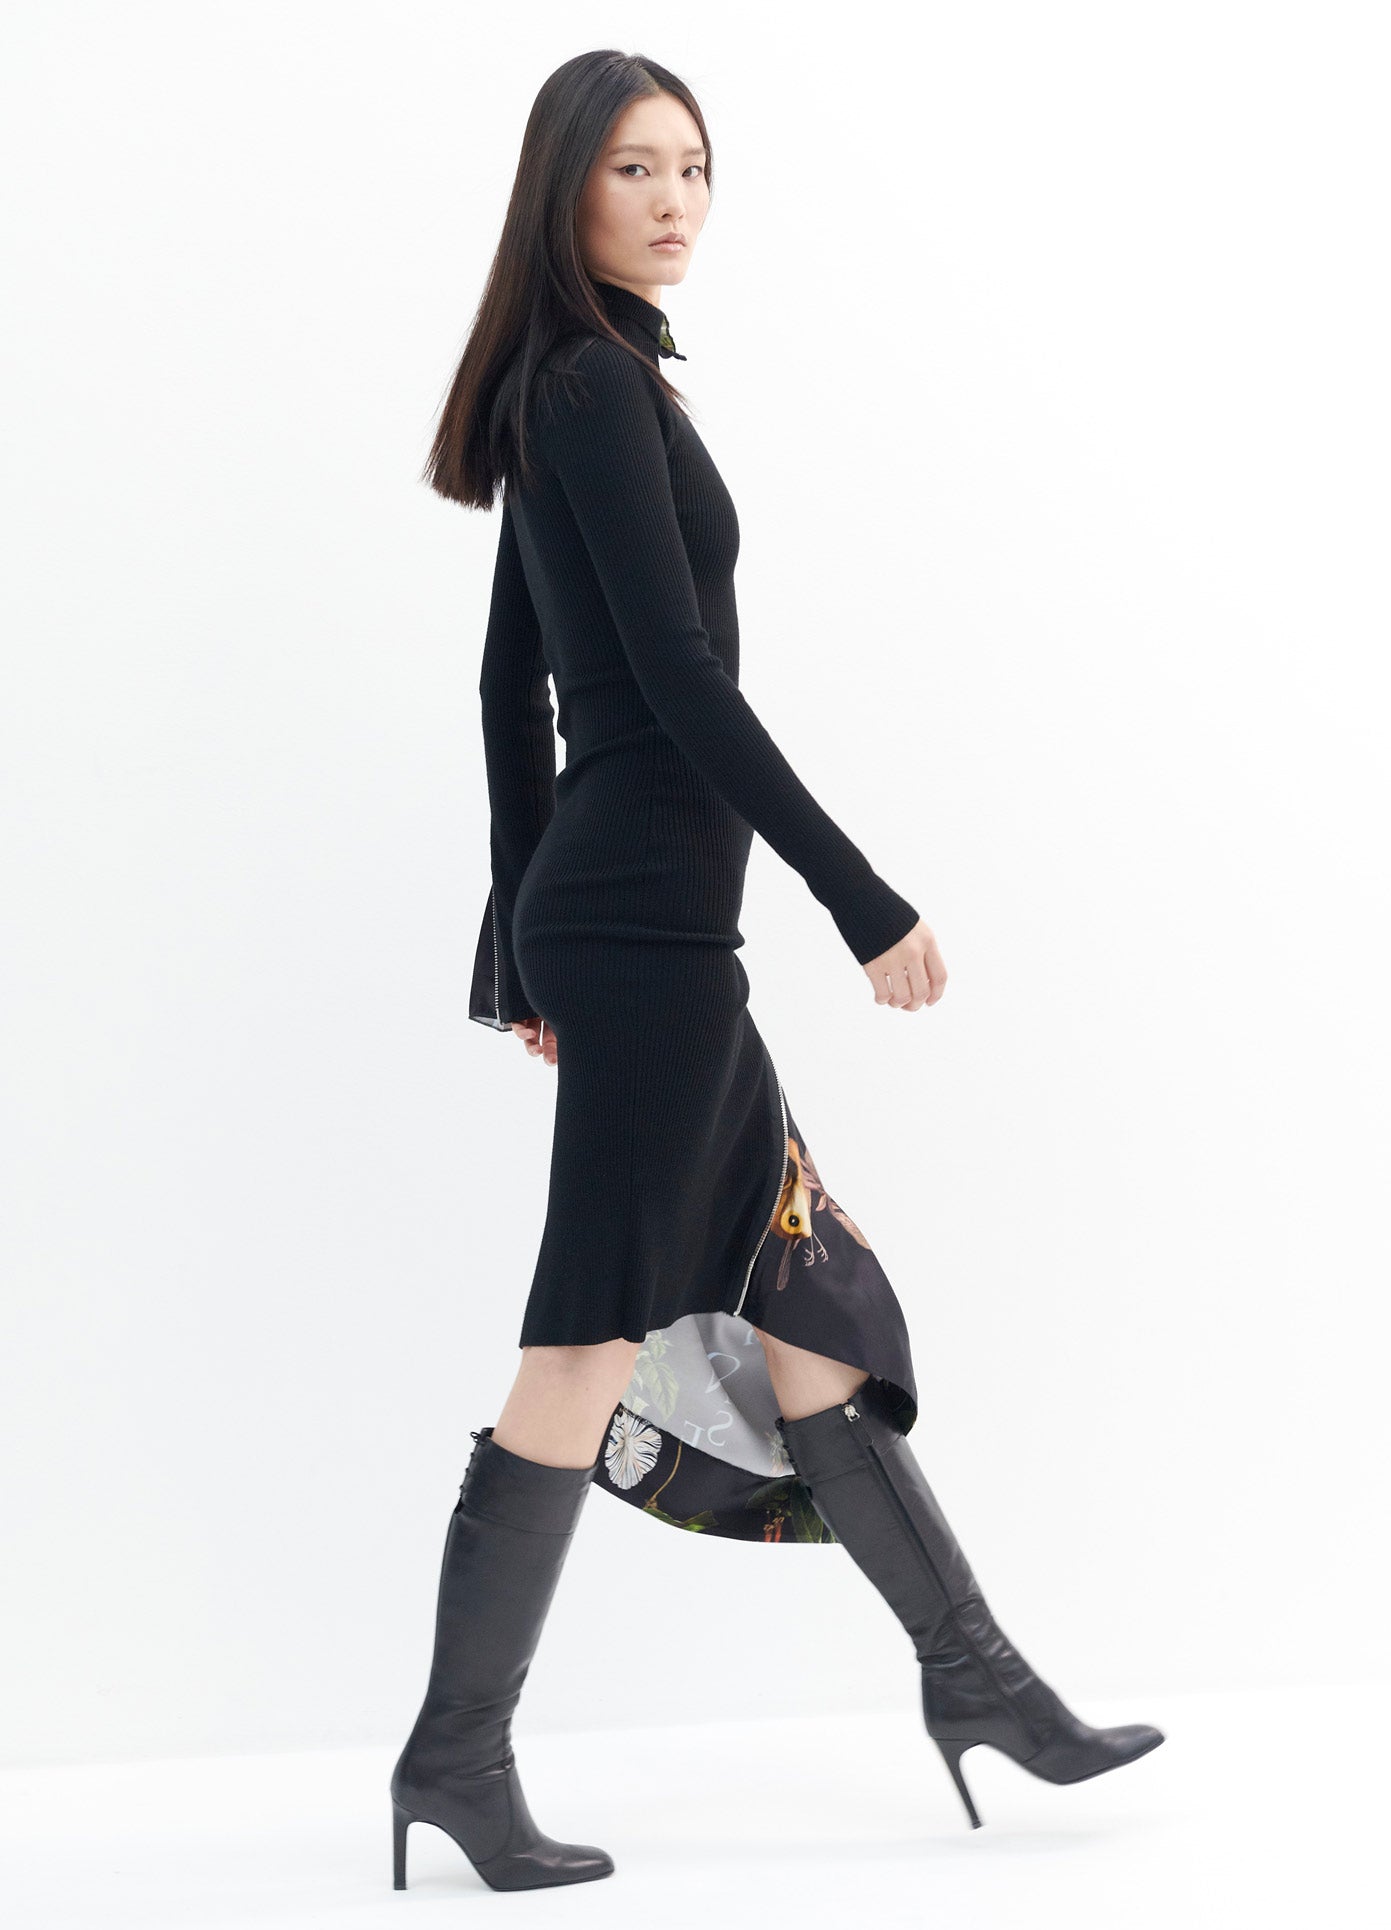 MONSE Long Sleeve Print Inset Zipper Detail Turtleneck Dress in Black Print on Model Walking Right Side View